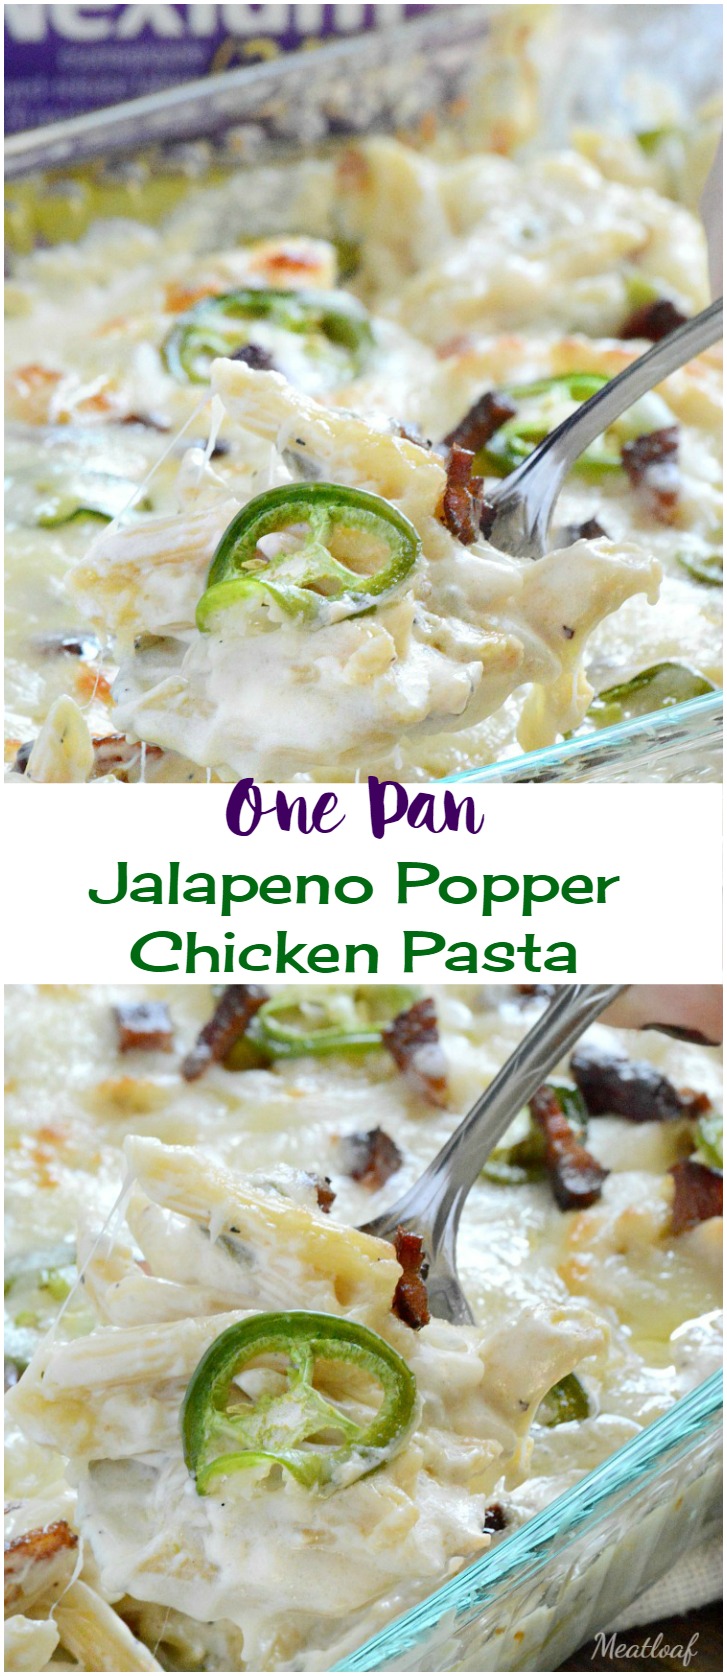 One Pan Jalapeno Popper Chicken Pasta